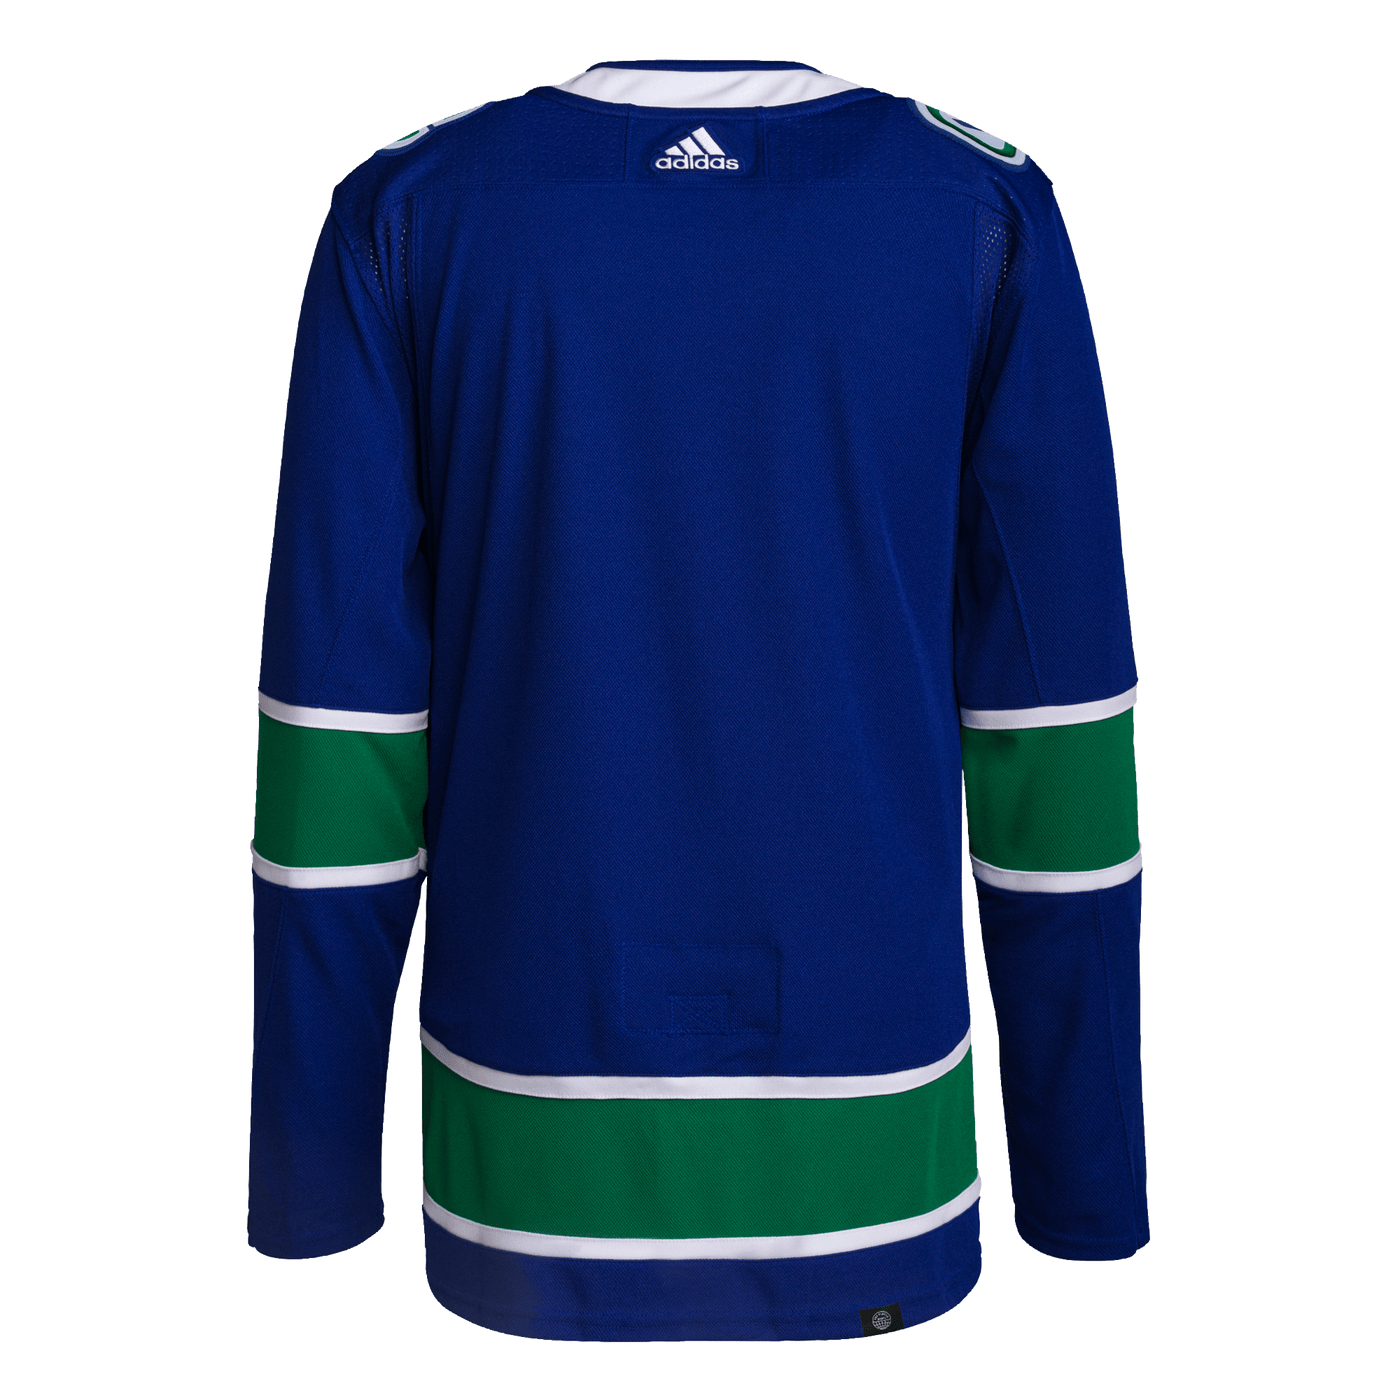 Vancouver Canucks Home Adidas PrimeGreen Senior Jersey